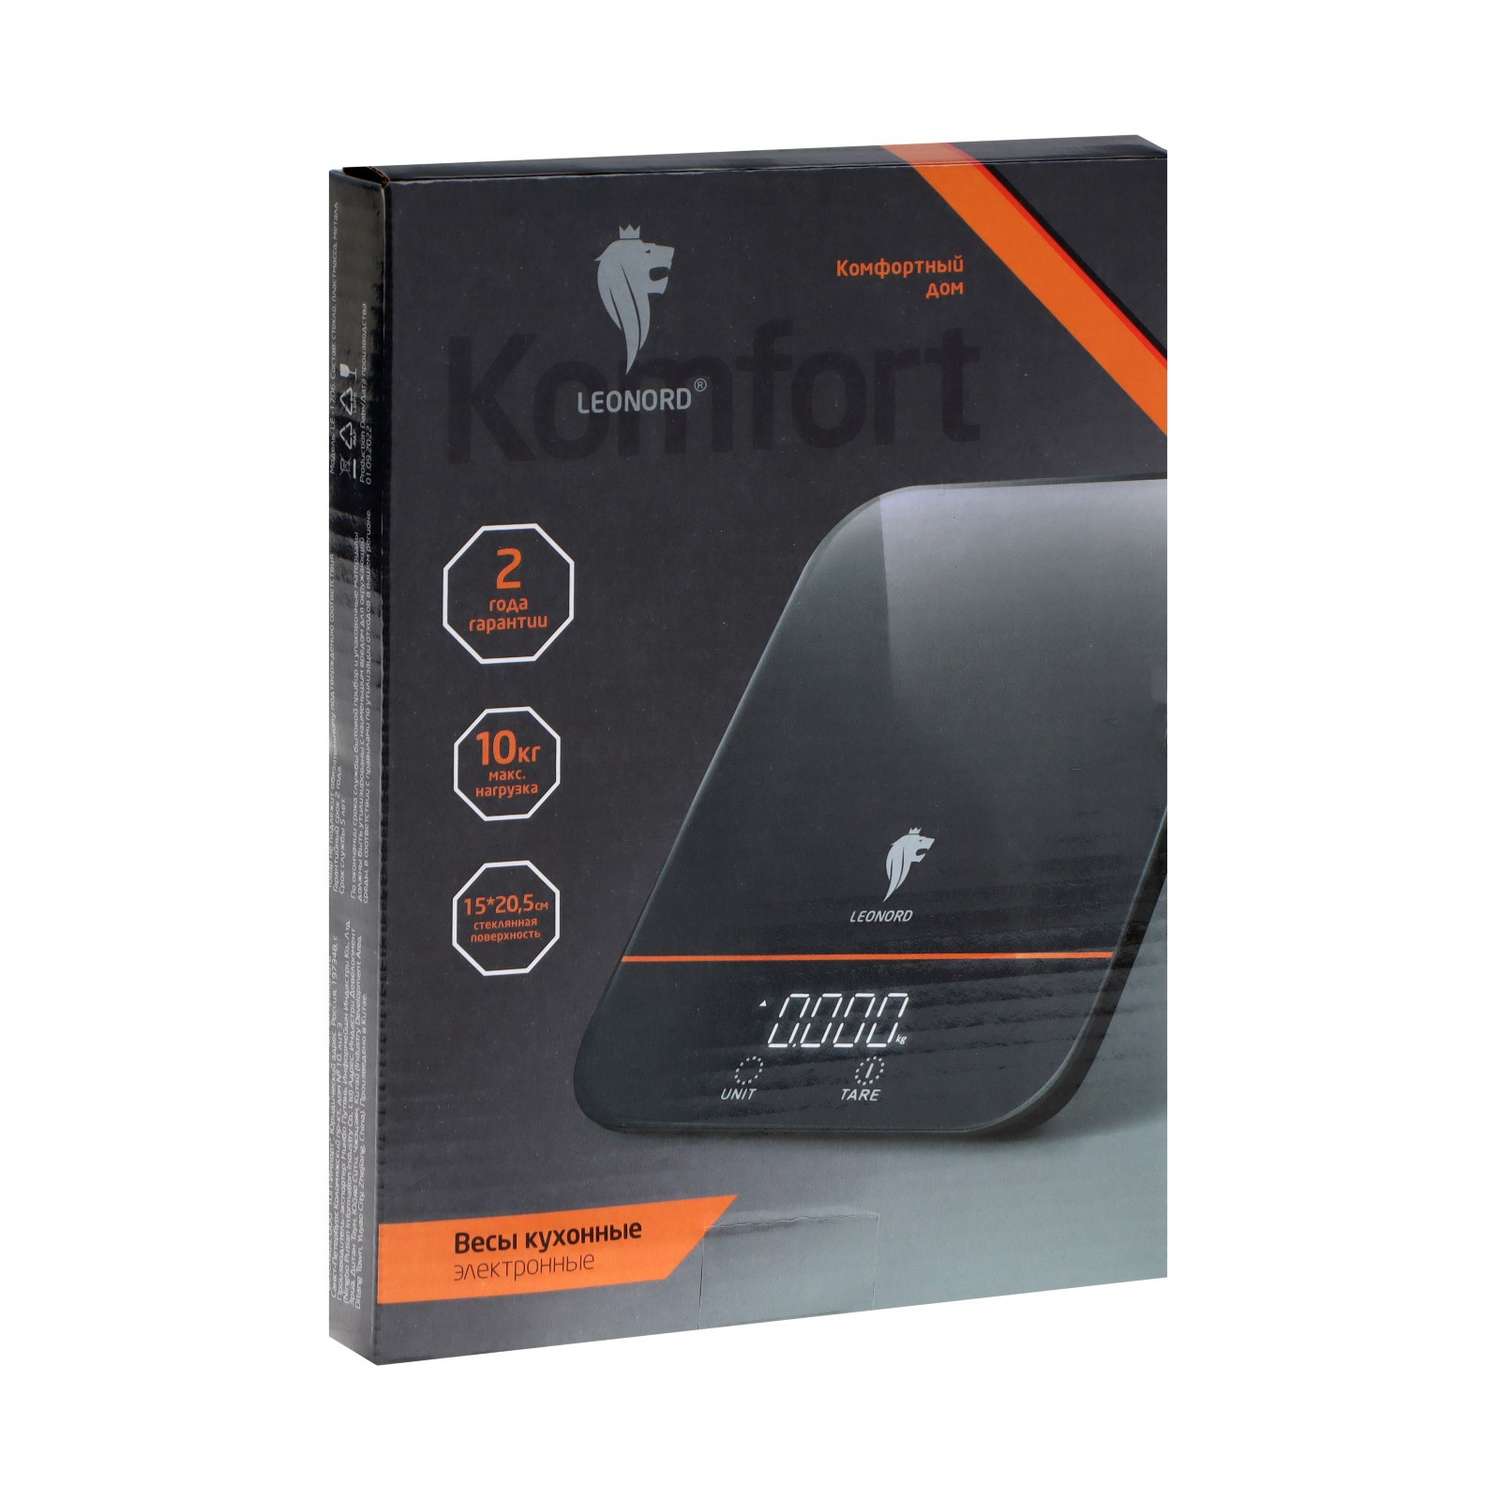 Весы кухонные Luazon Home LE-1706 электронные до 10 кг LCD дисплей чёрные - фото 9